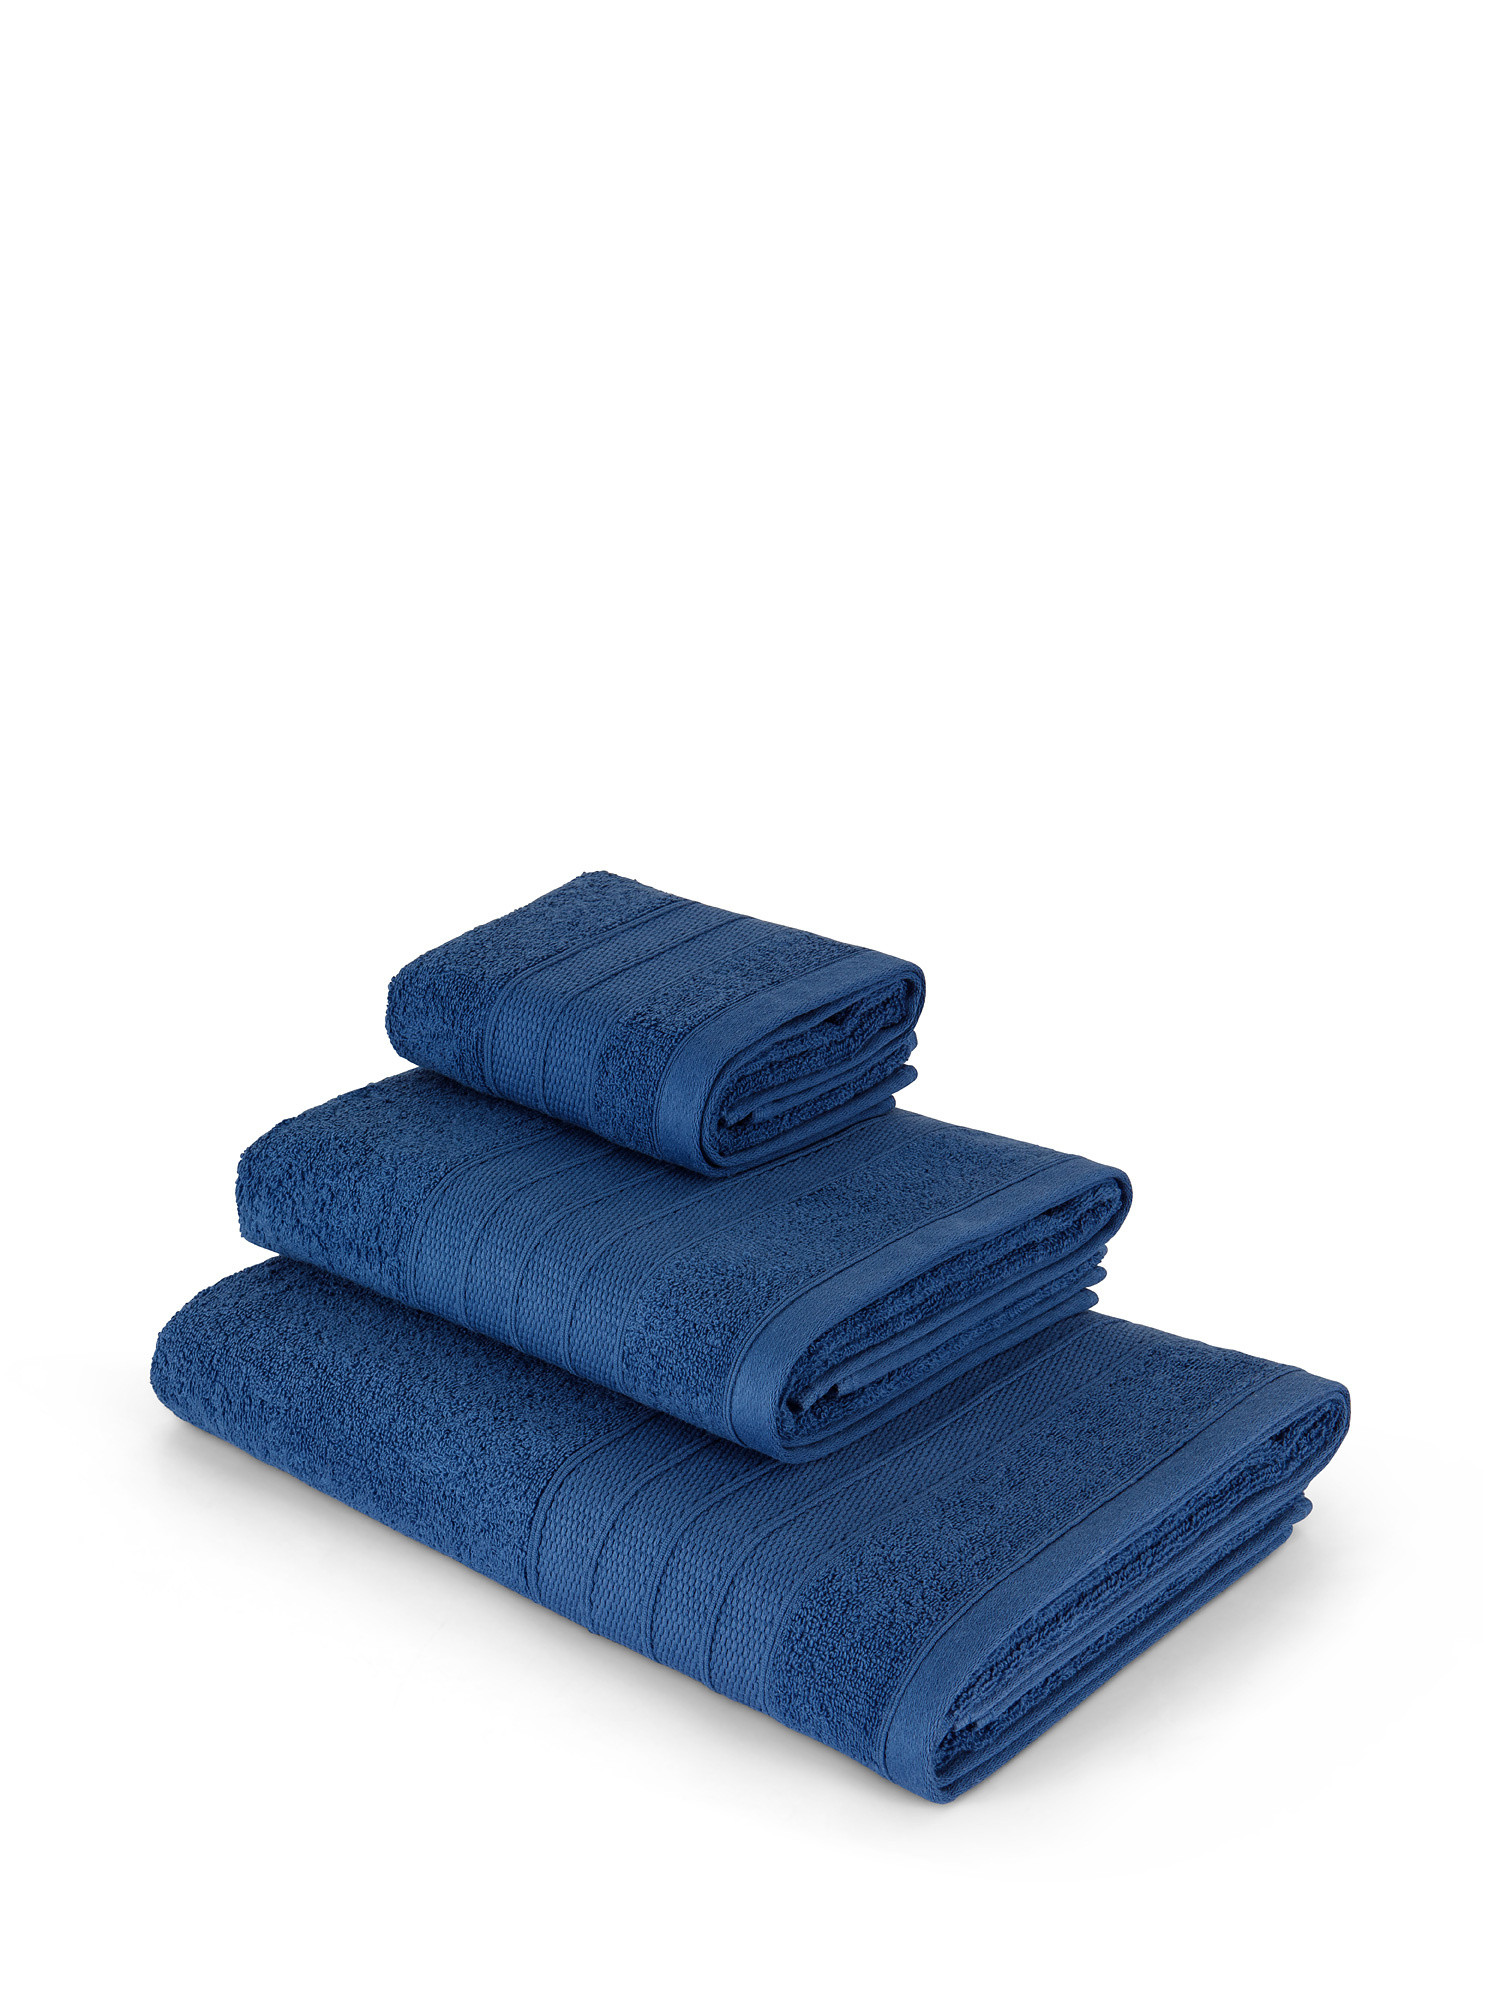 Asciugamano spugna di cotone tinta unita, Blu, large image number 0